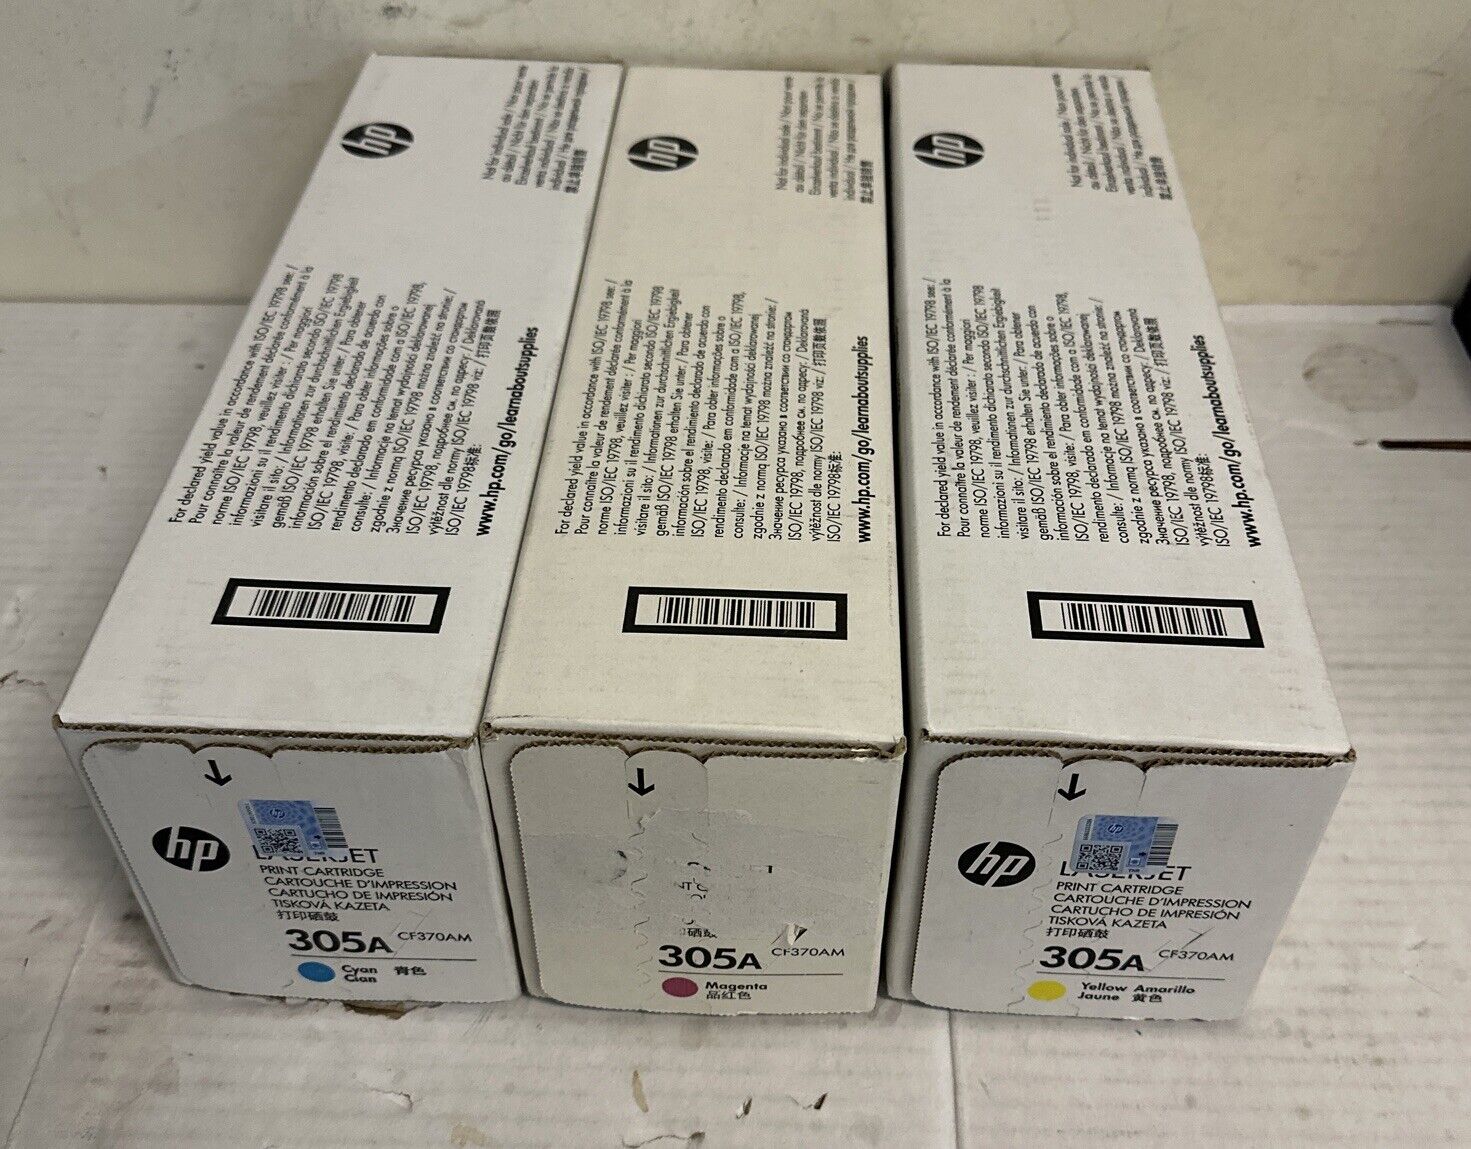 NEW HP 305A CF370AM 3-Pack LaserJet Toner Cartridge  CE411A CE412A CE413A